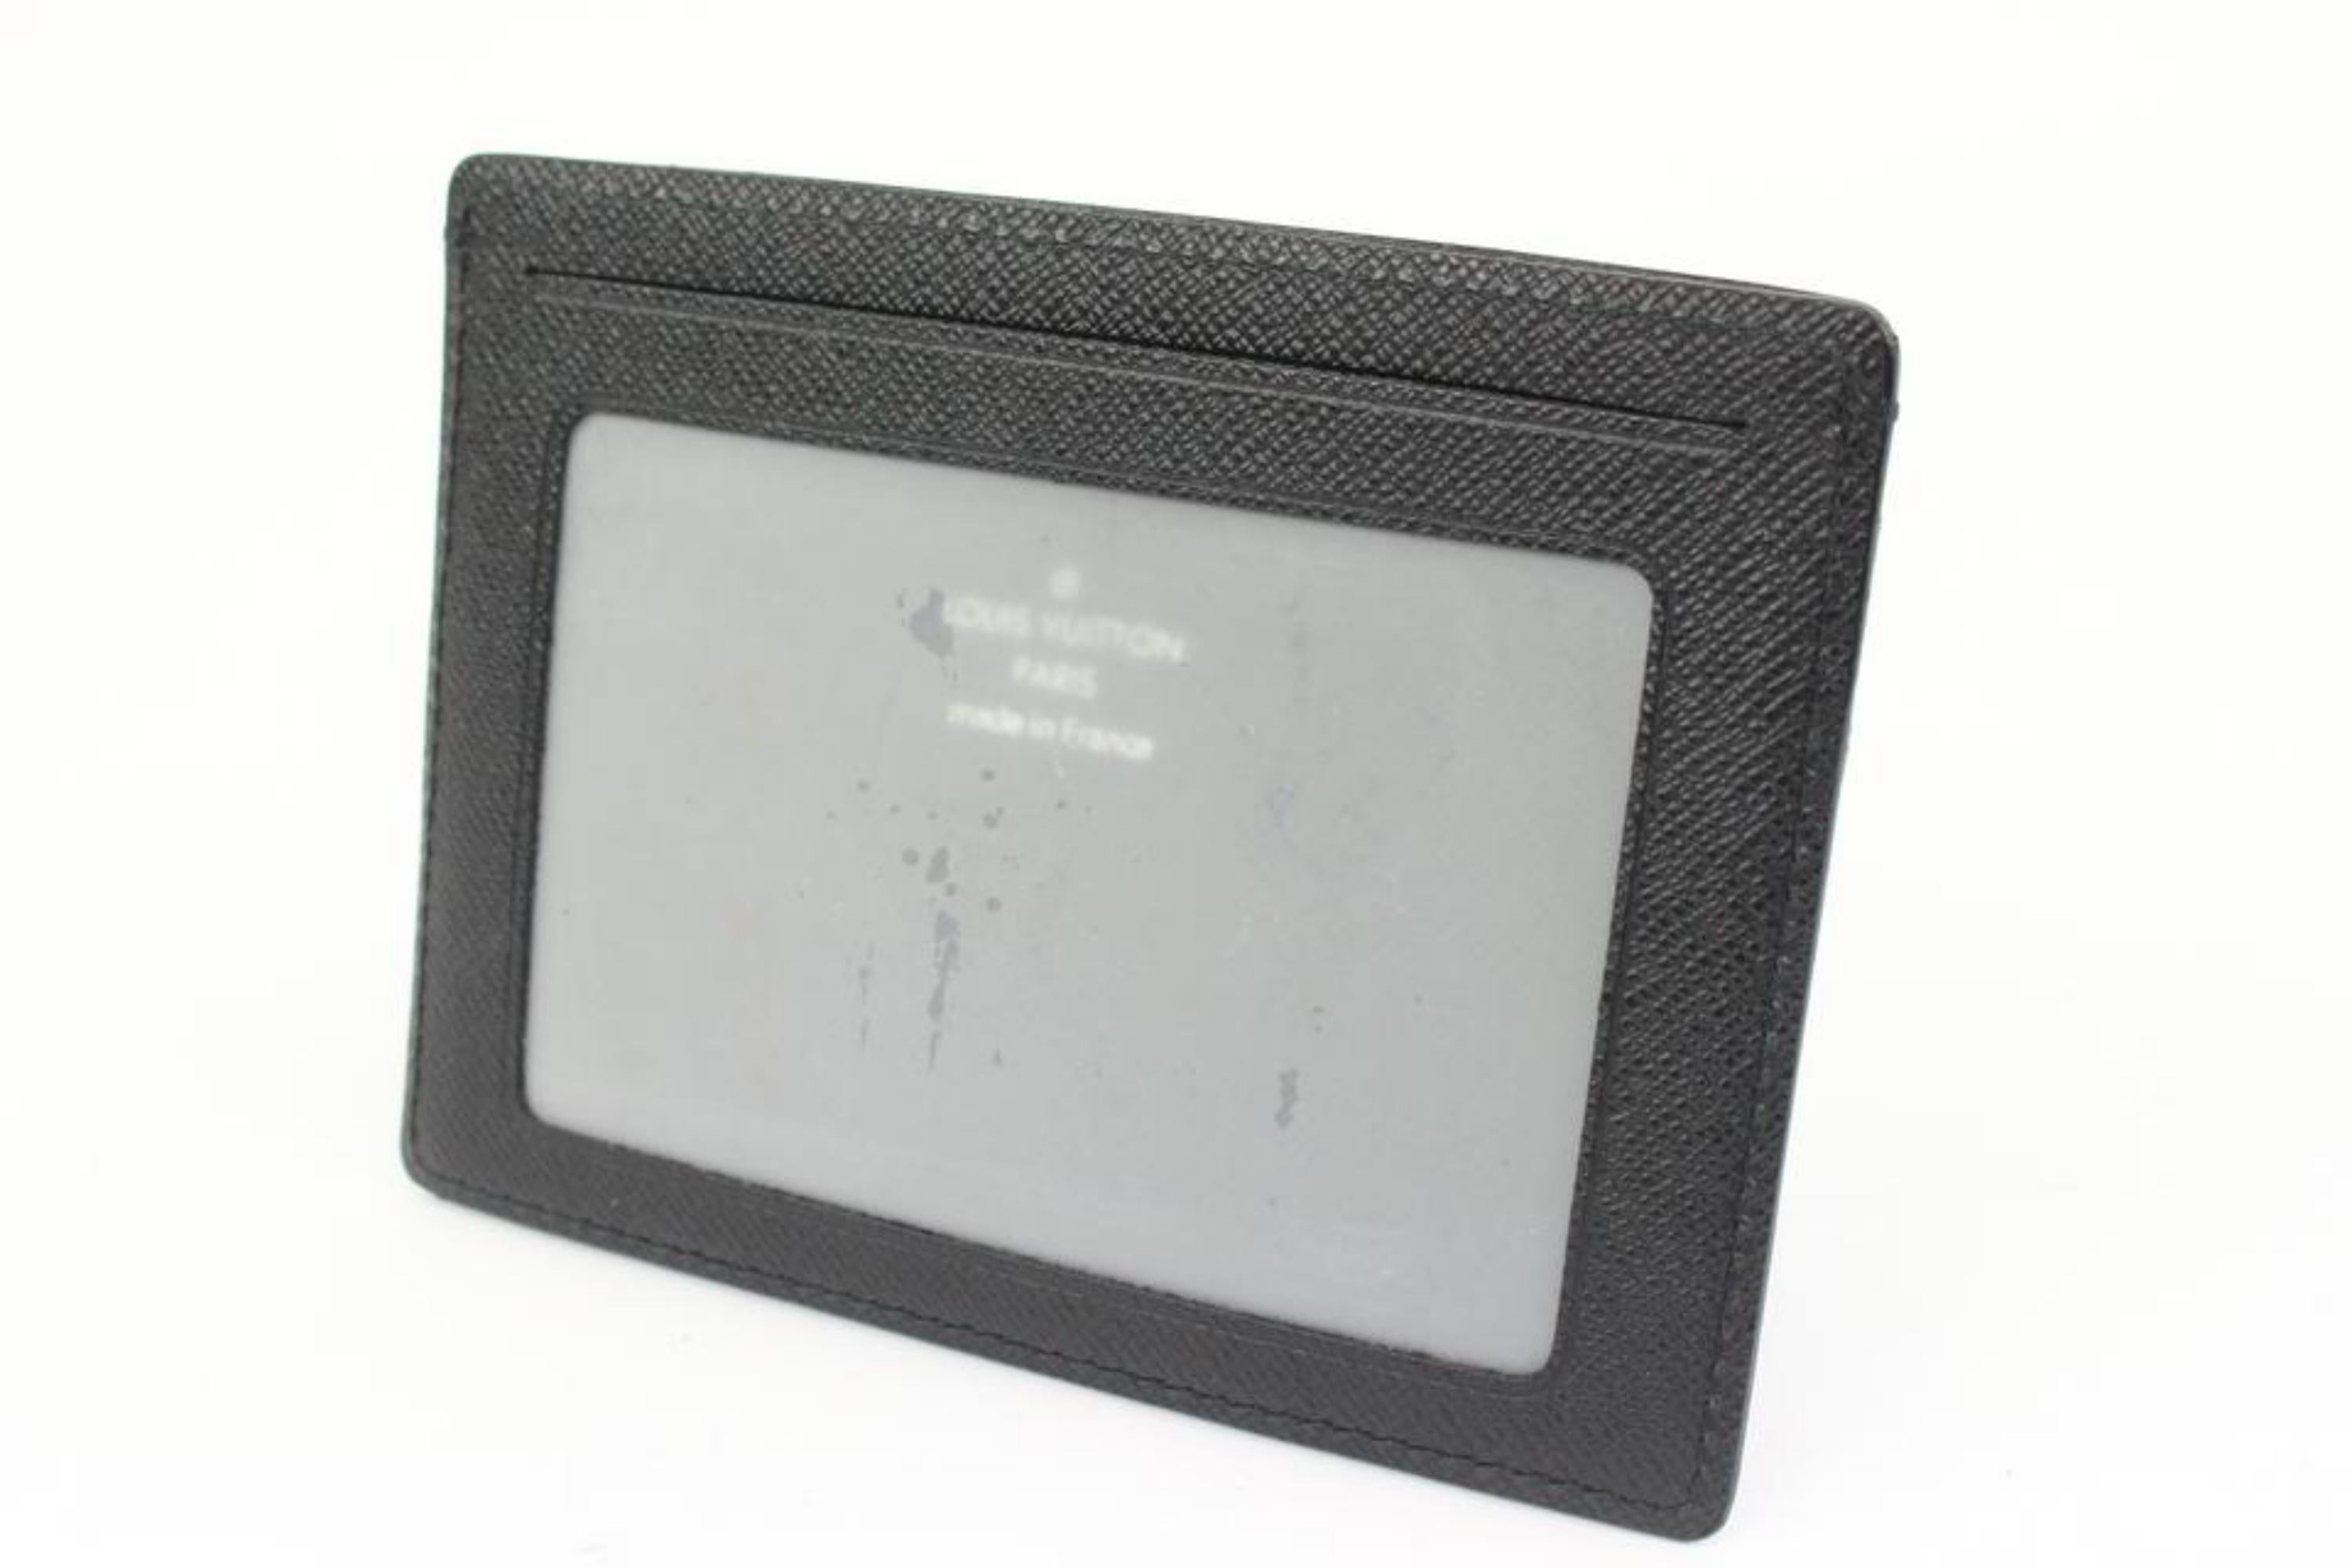 Louis Vuitton Damier Graphite Large Card Holder Wallet Case Insert 1LVA726 4